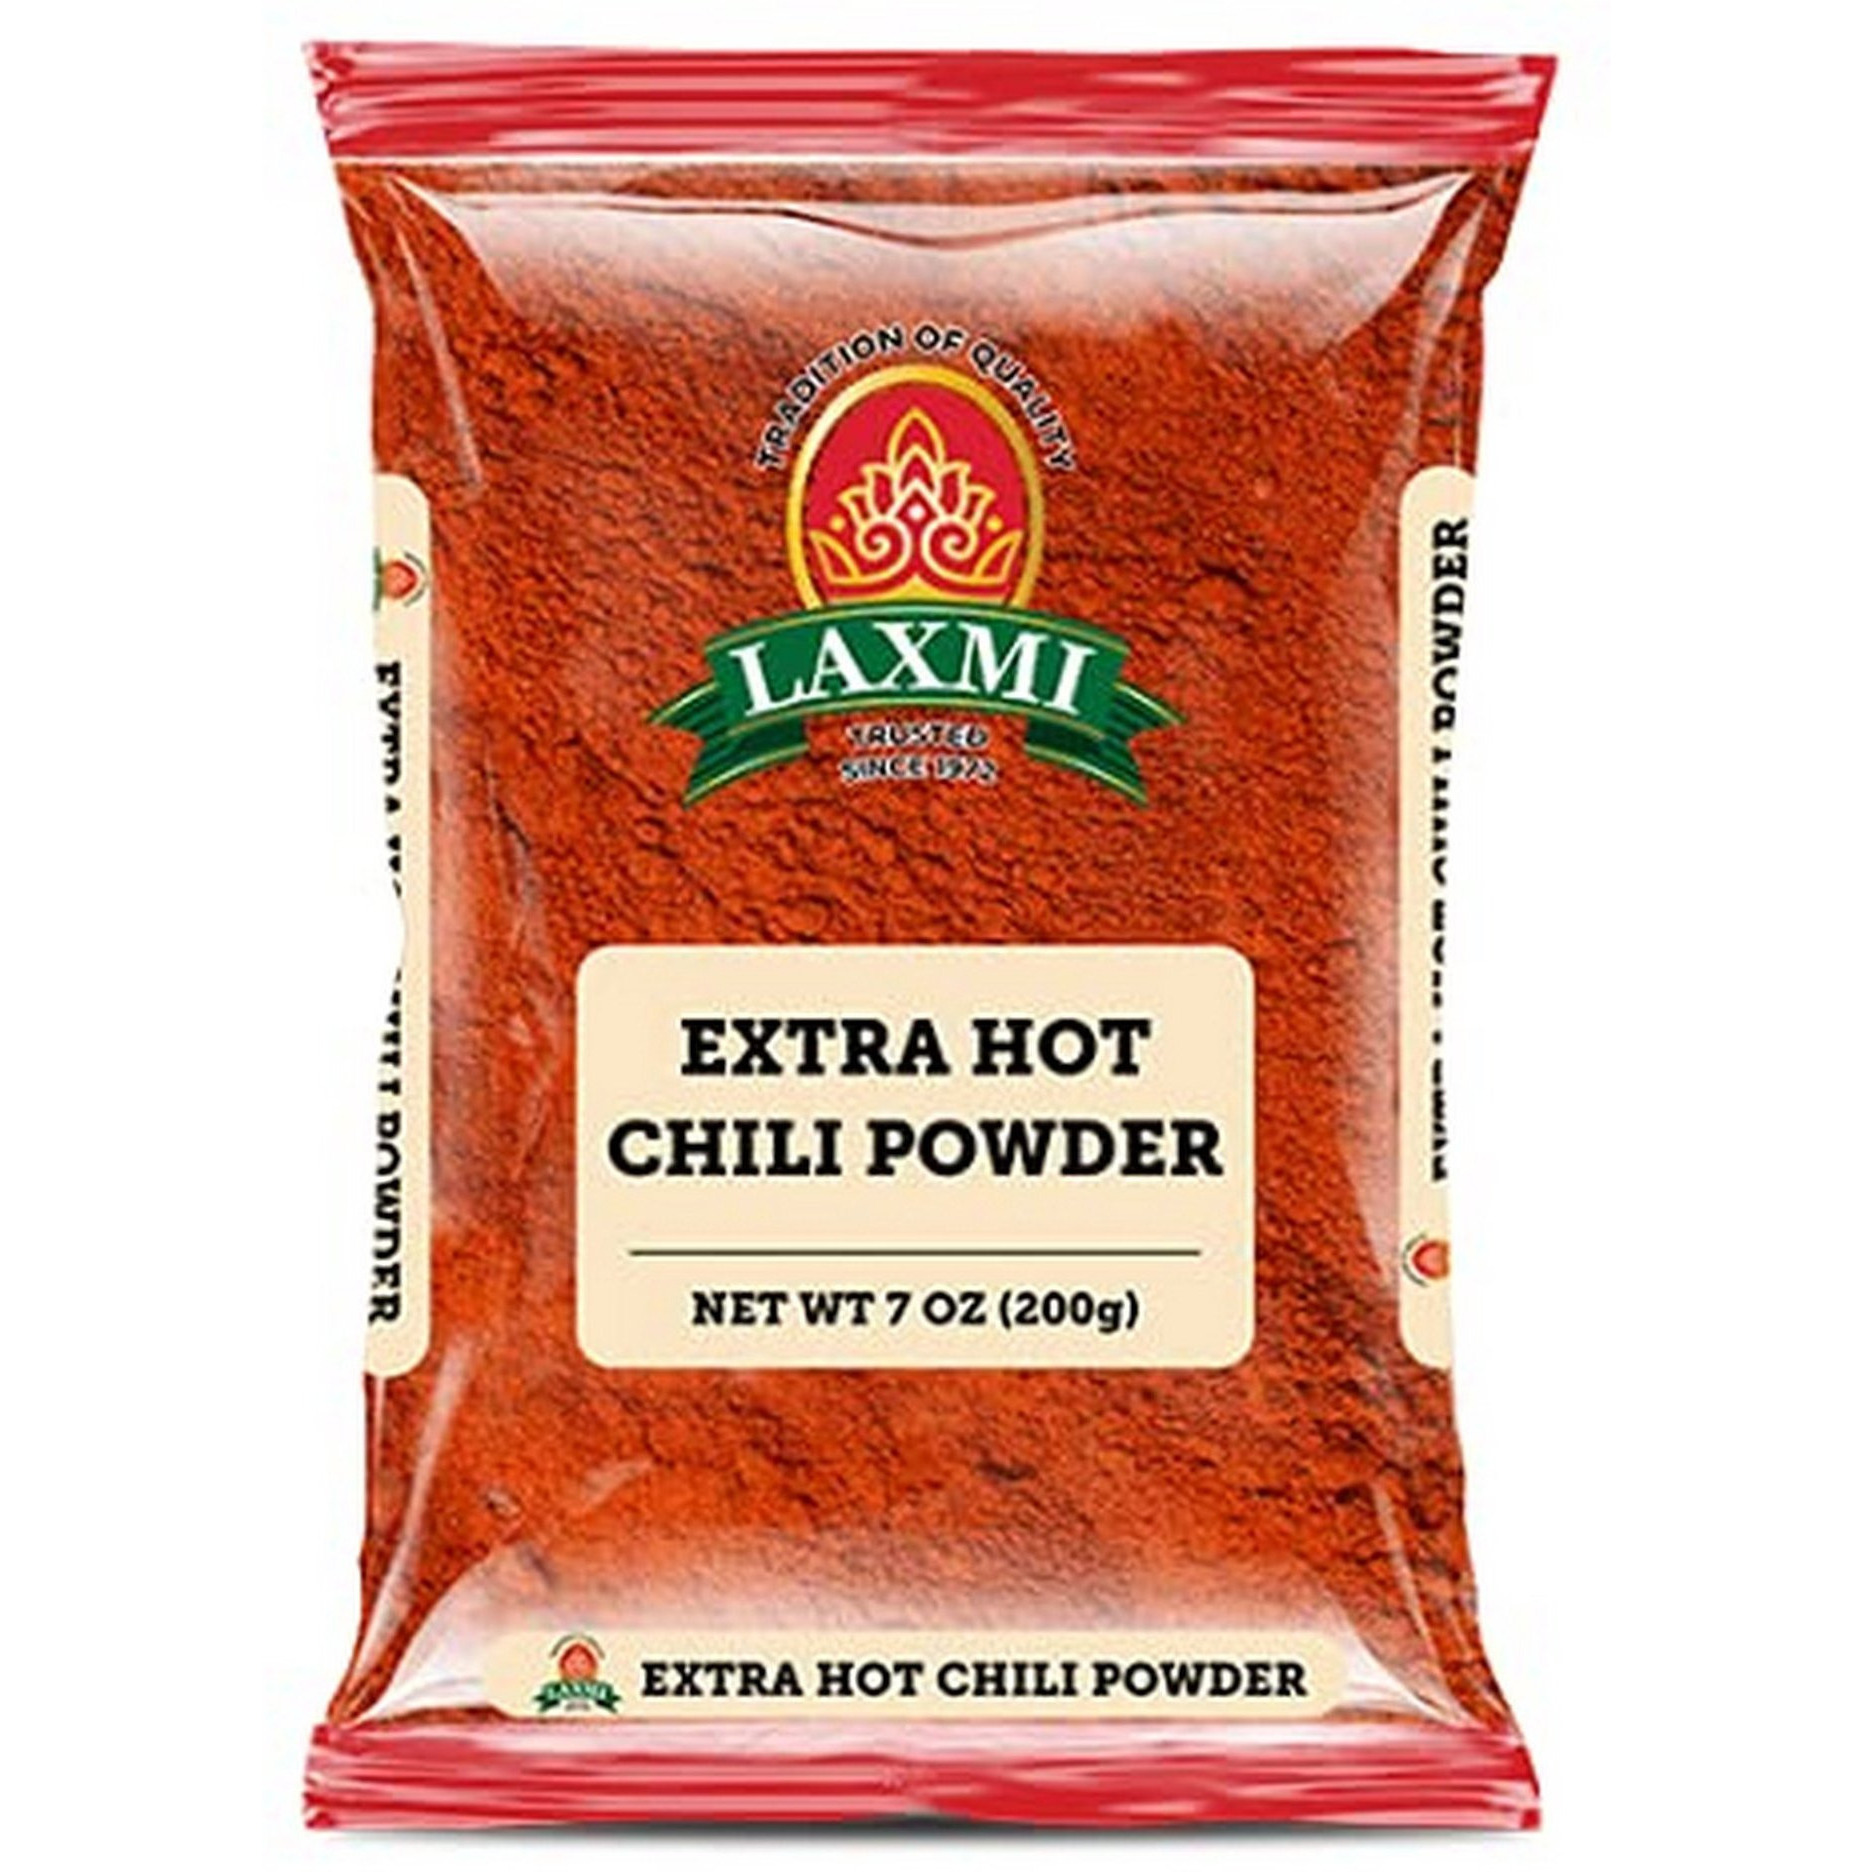 Pack of 4 - Laxmi Extra Hot Chili Powder - 200 Gm (7 Oz)